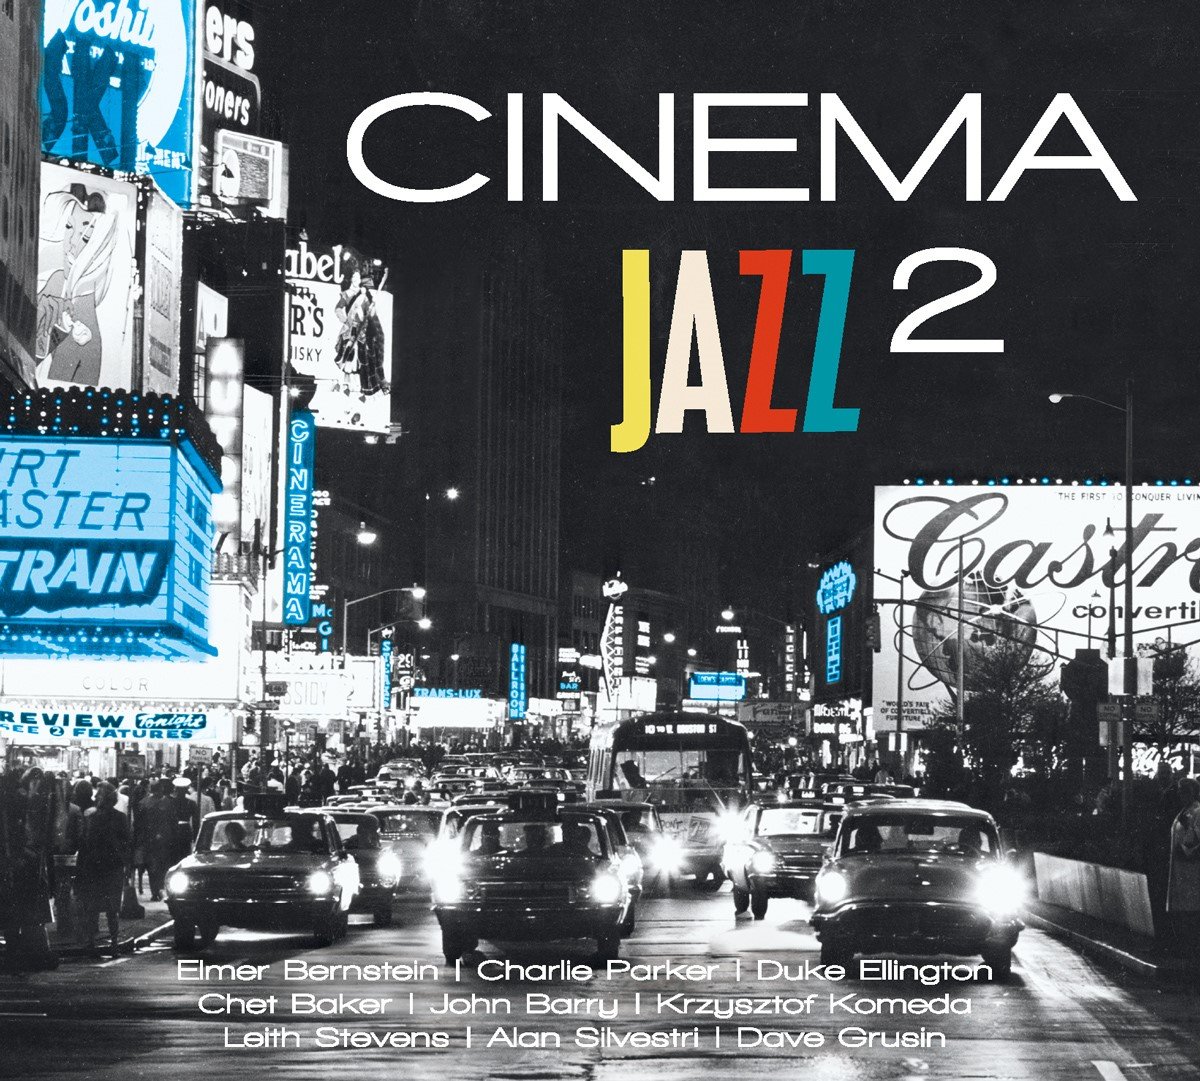 Cinema Jazz 2